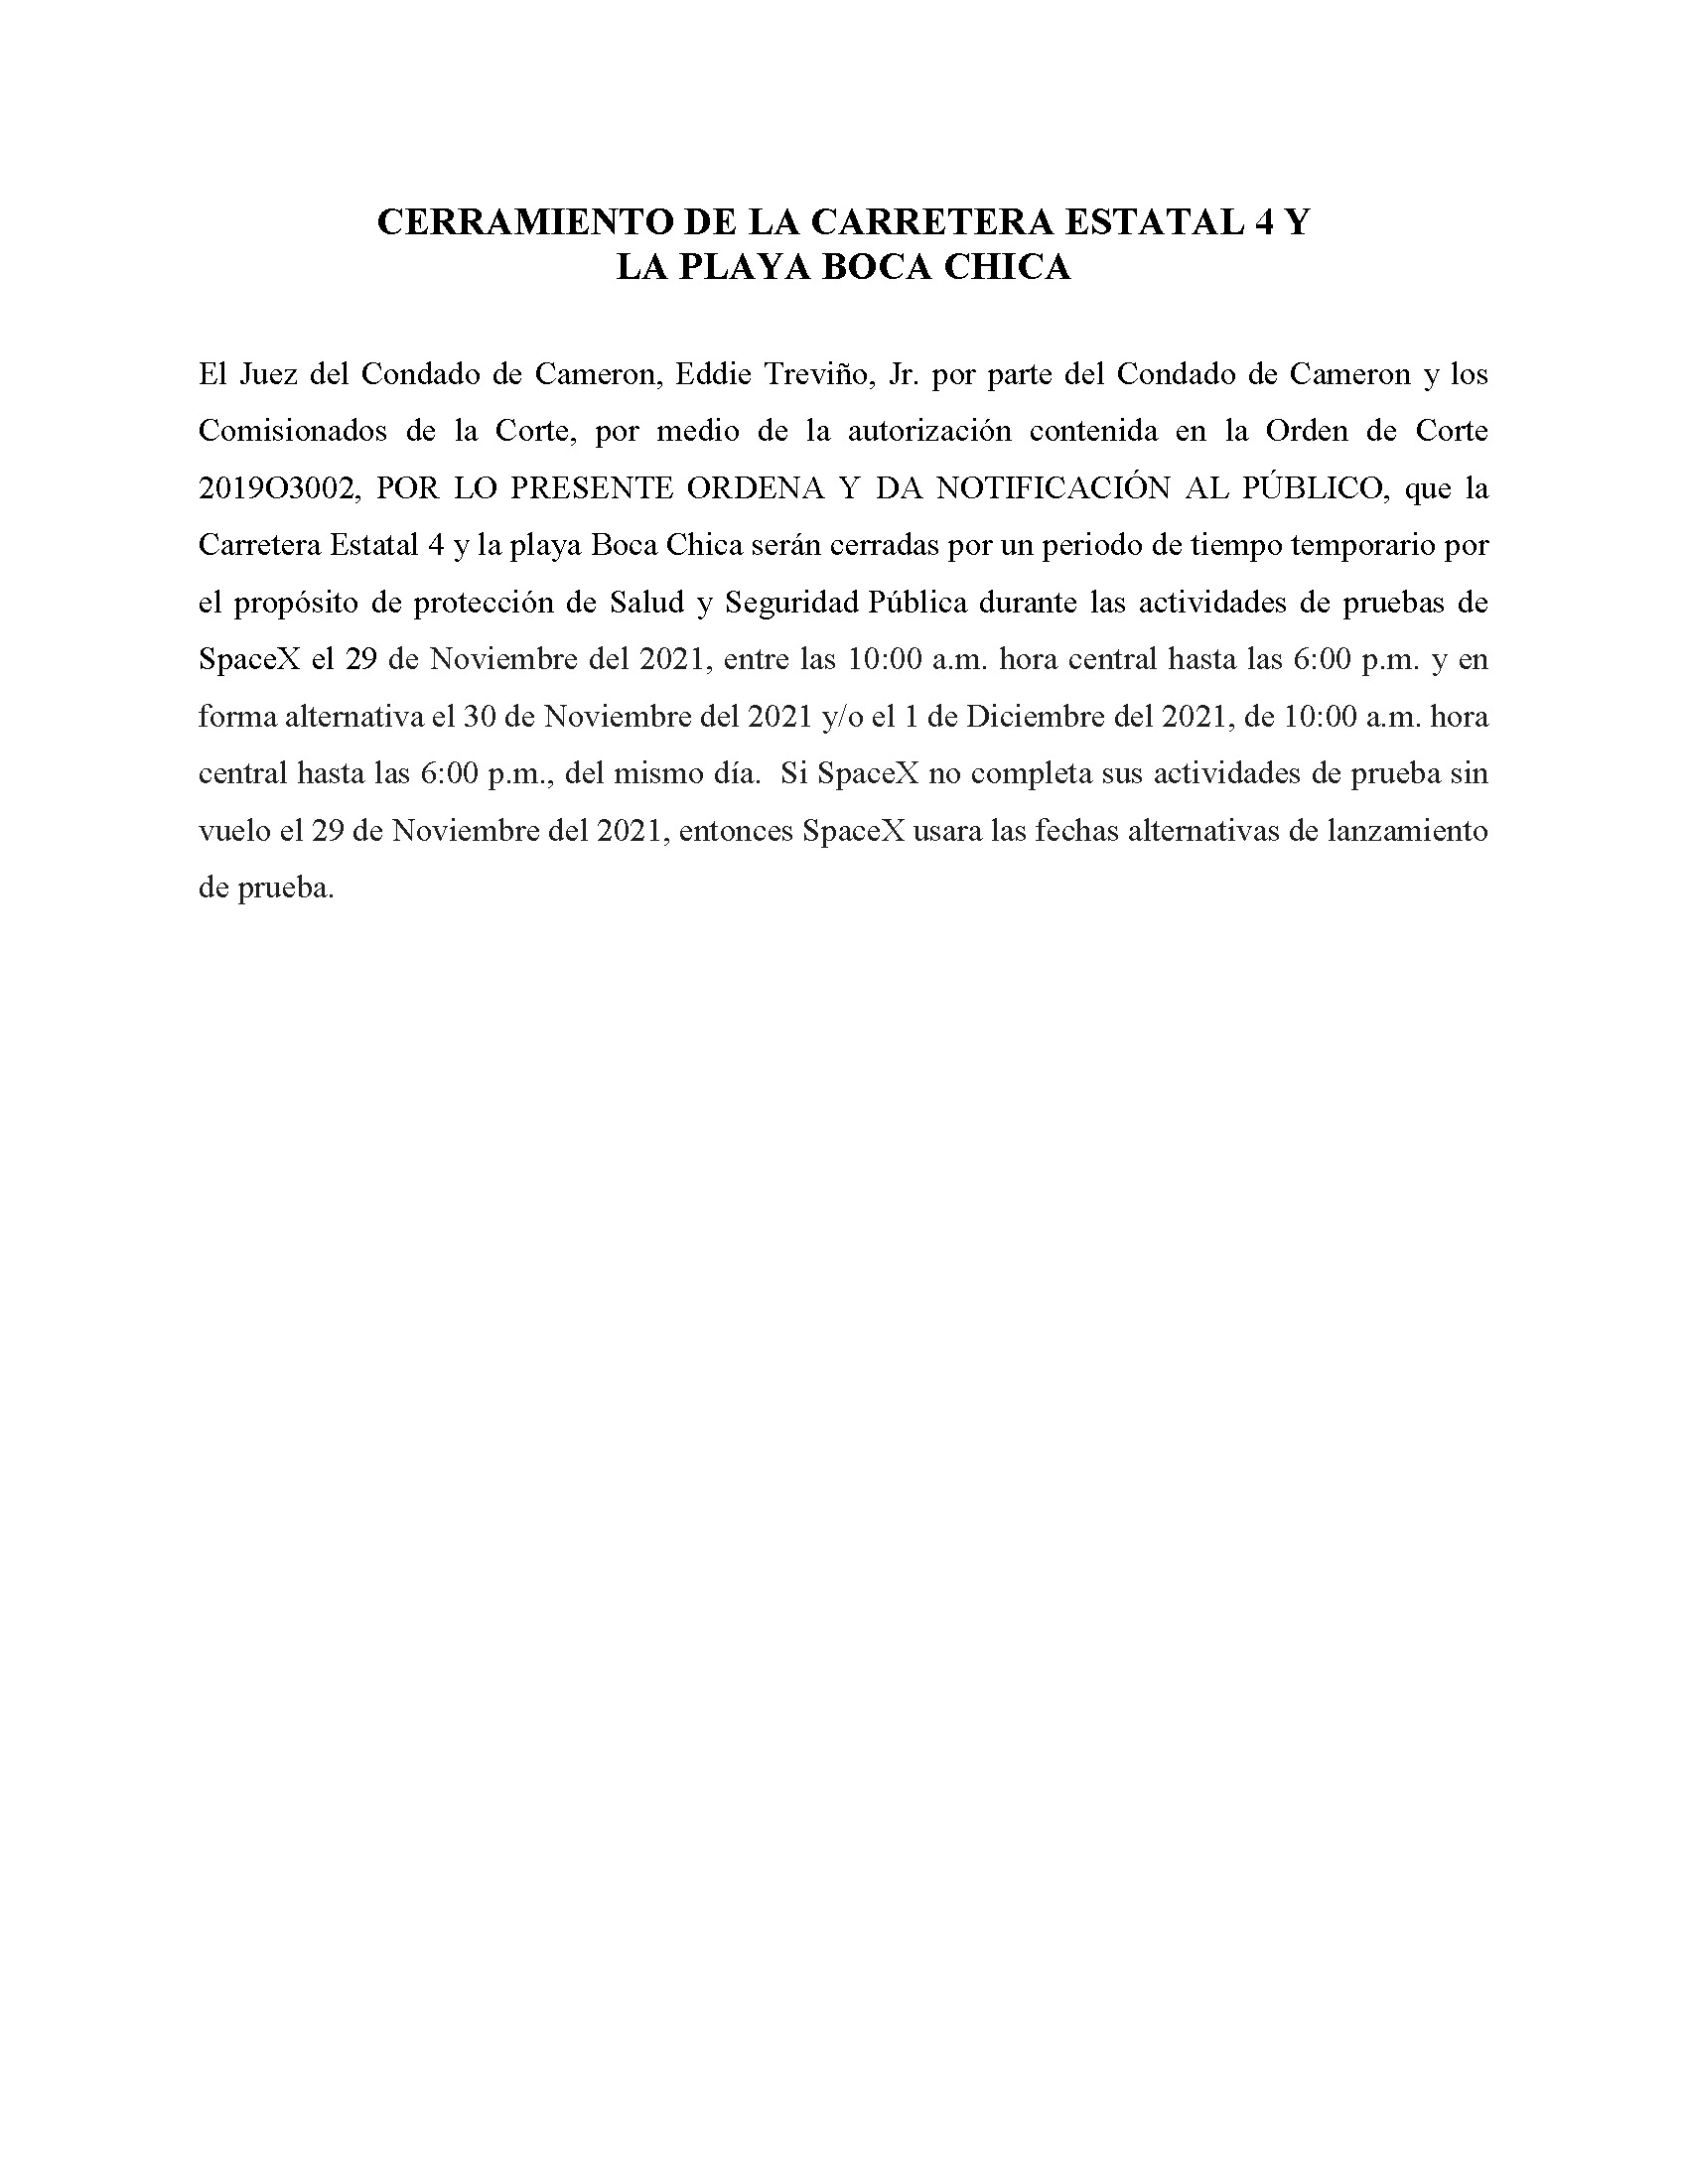 ORDER.CLOSURE OF HIGHWAY 4 Y LA PLAYA BOCA CHICA.SPANISH.11.29.2021